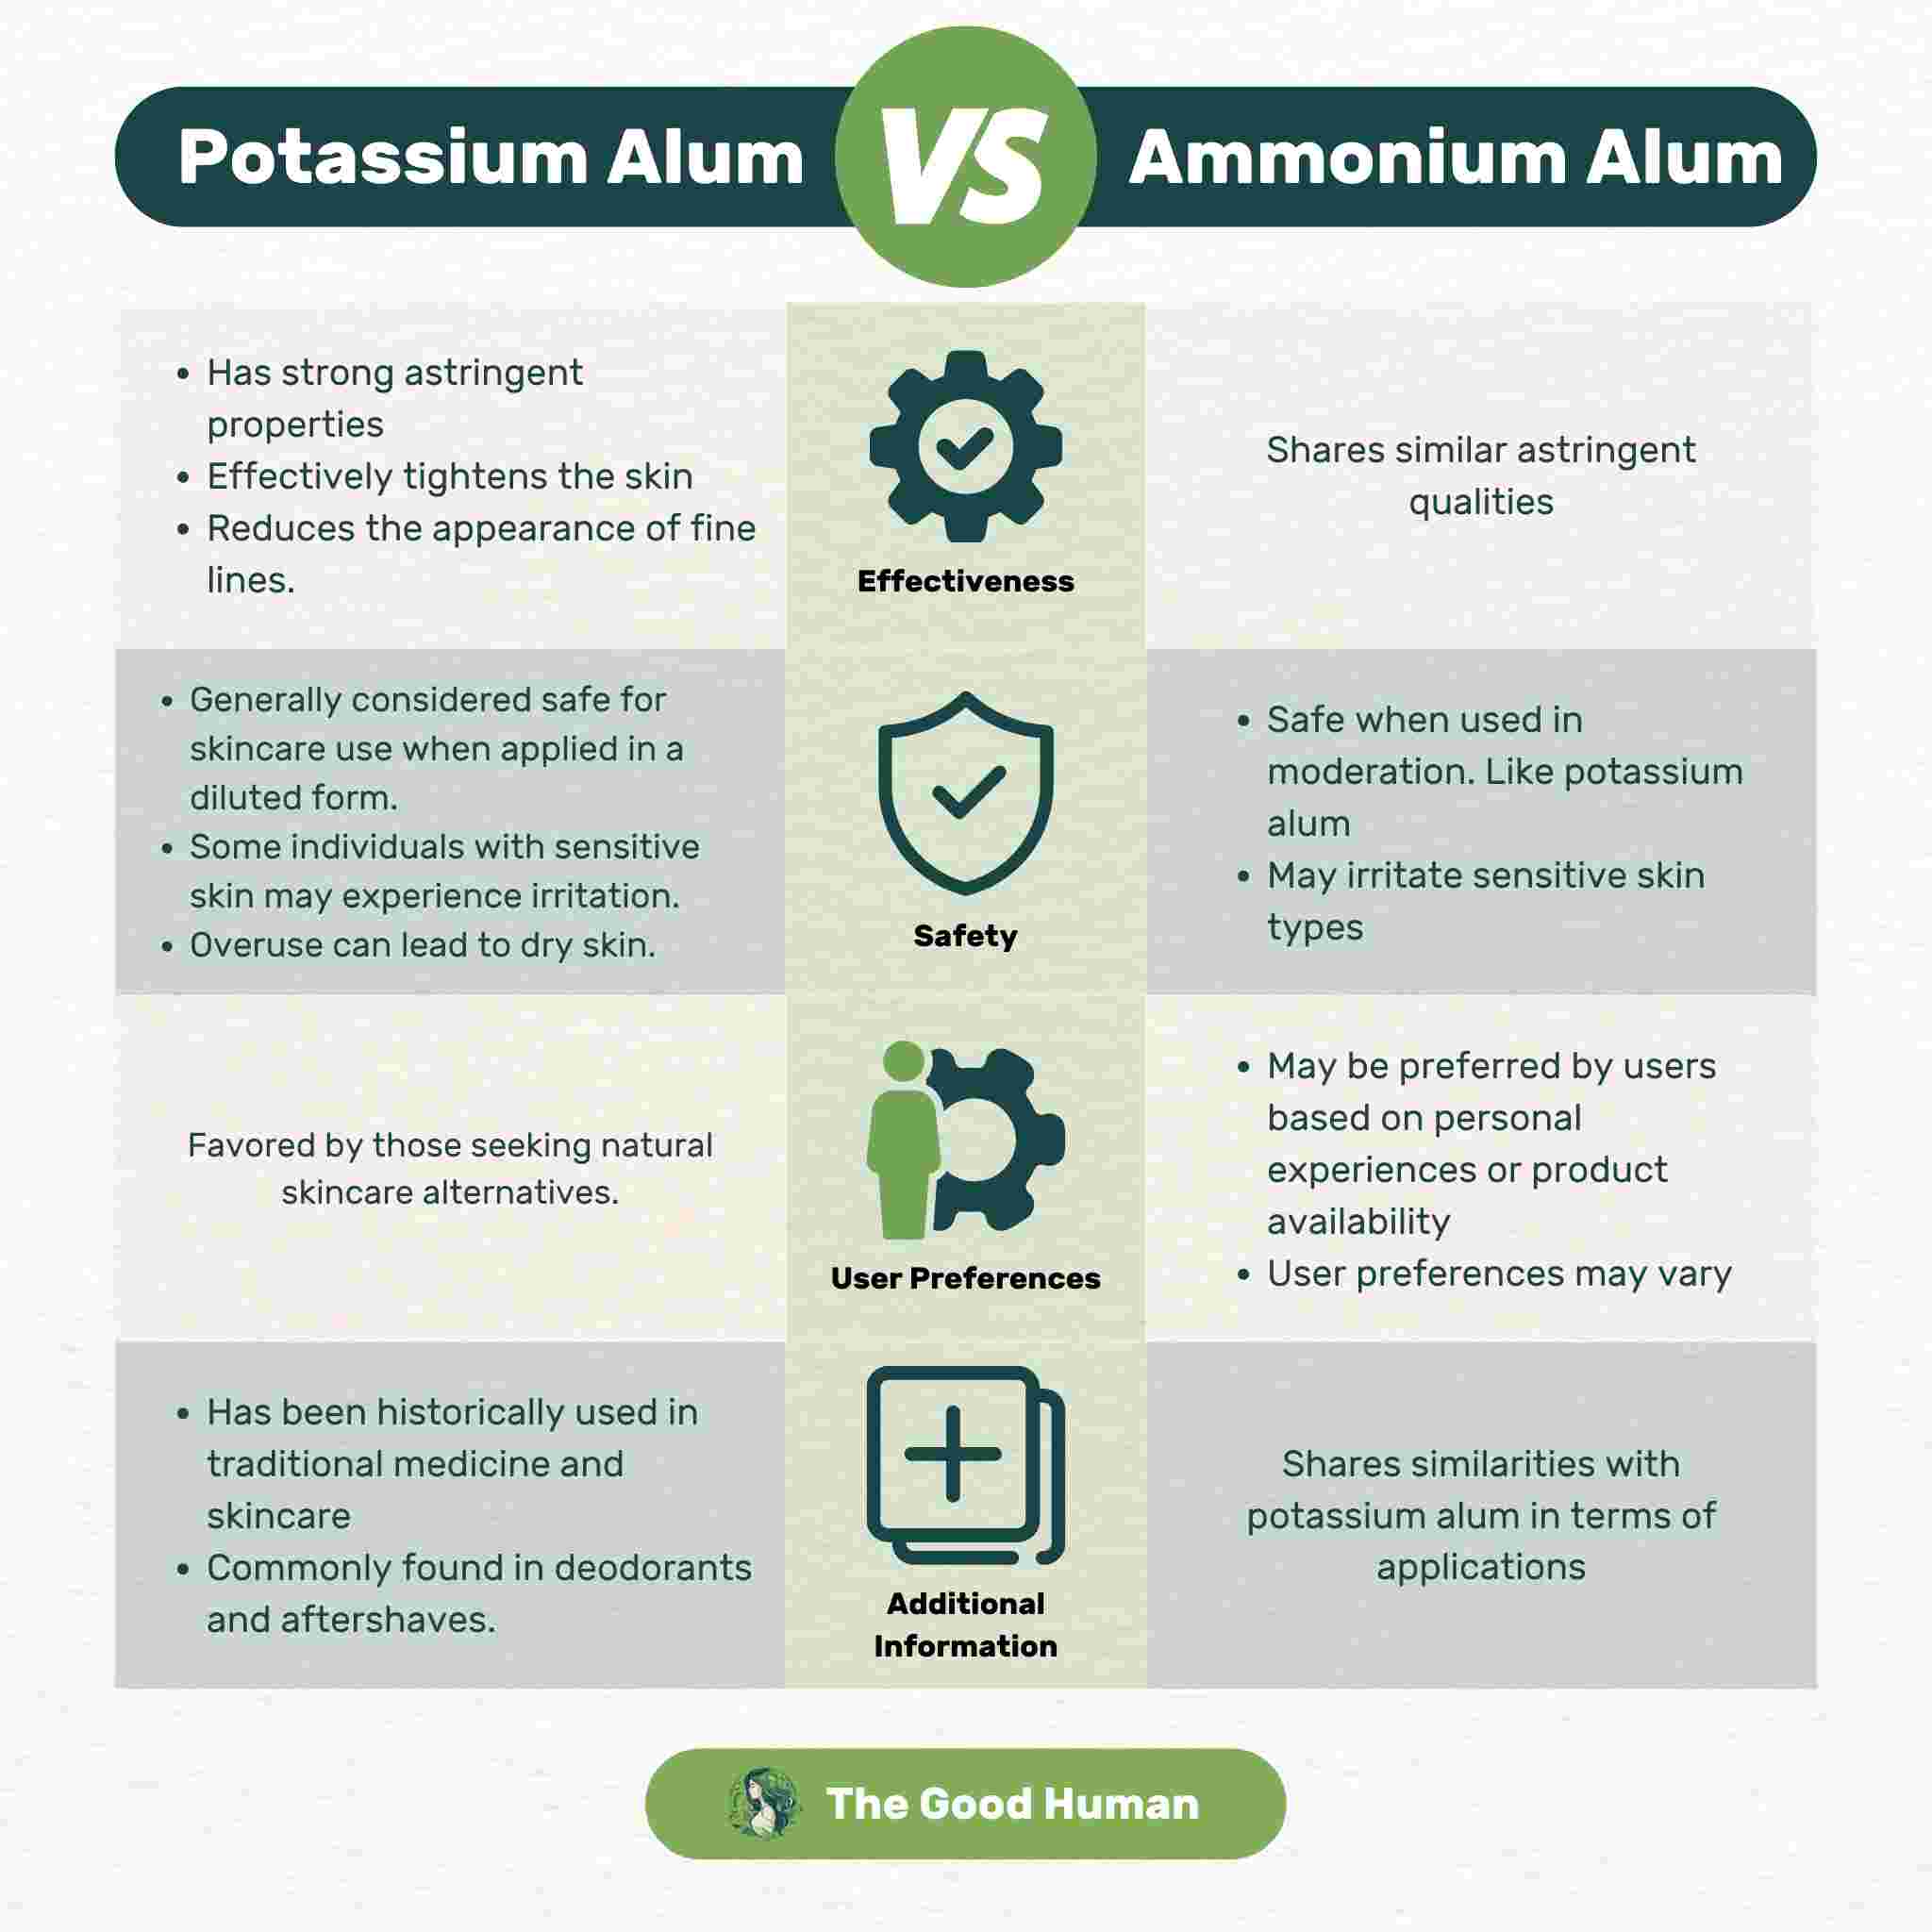 An infographic on the comparison between potassium alum and ammonium alum.